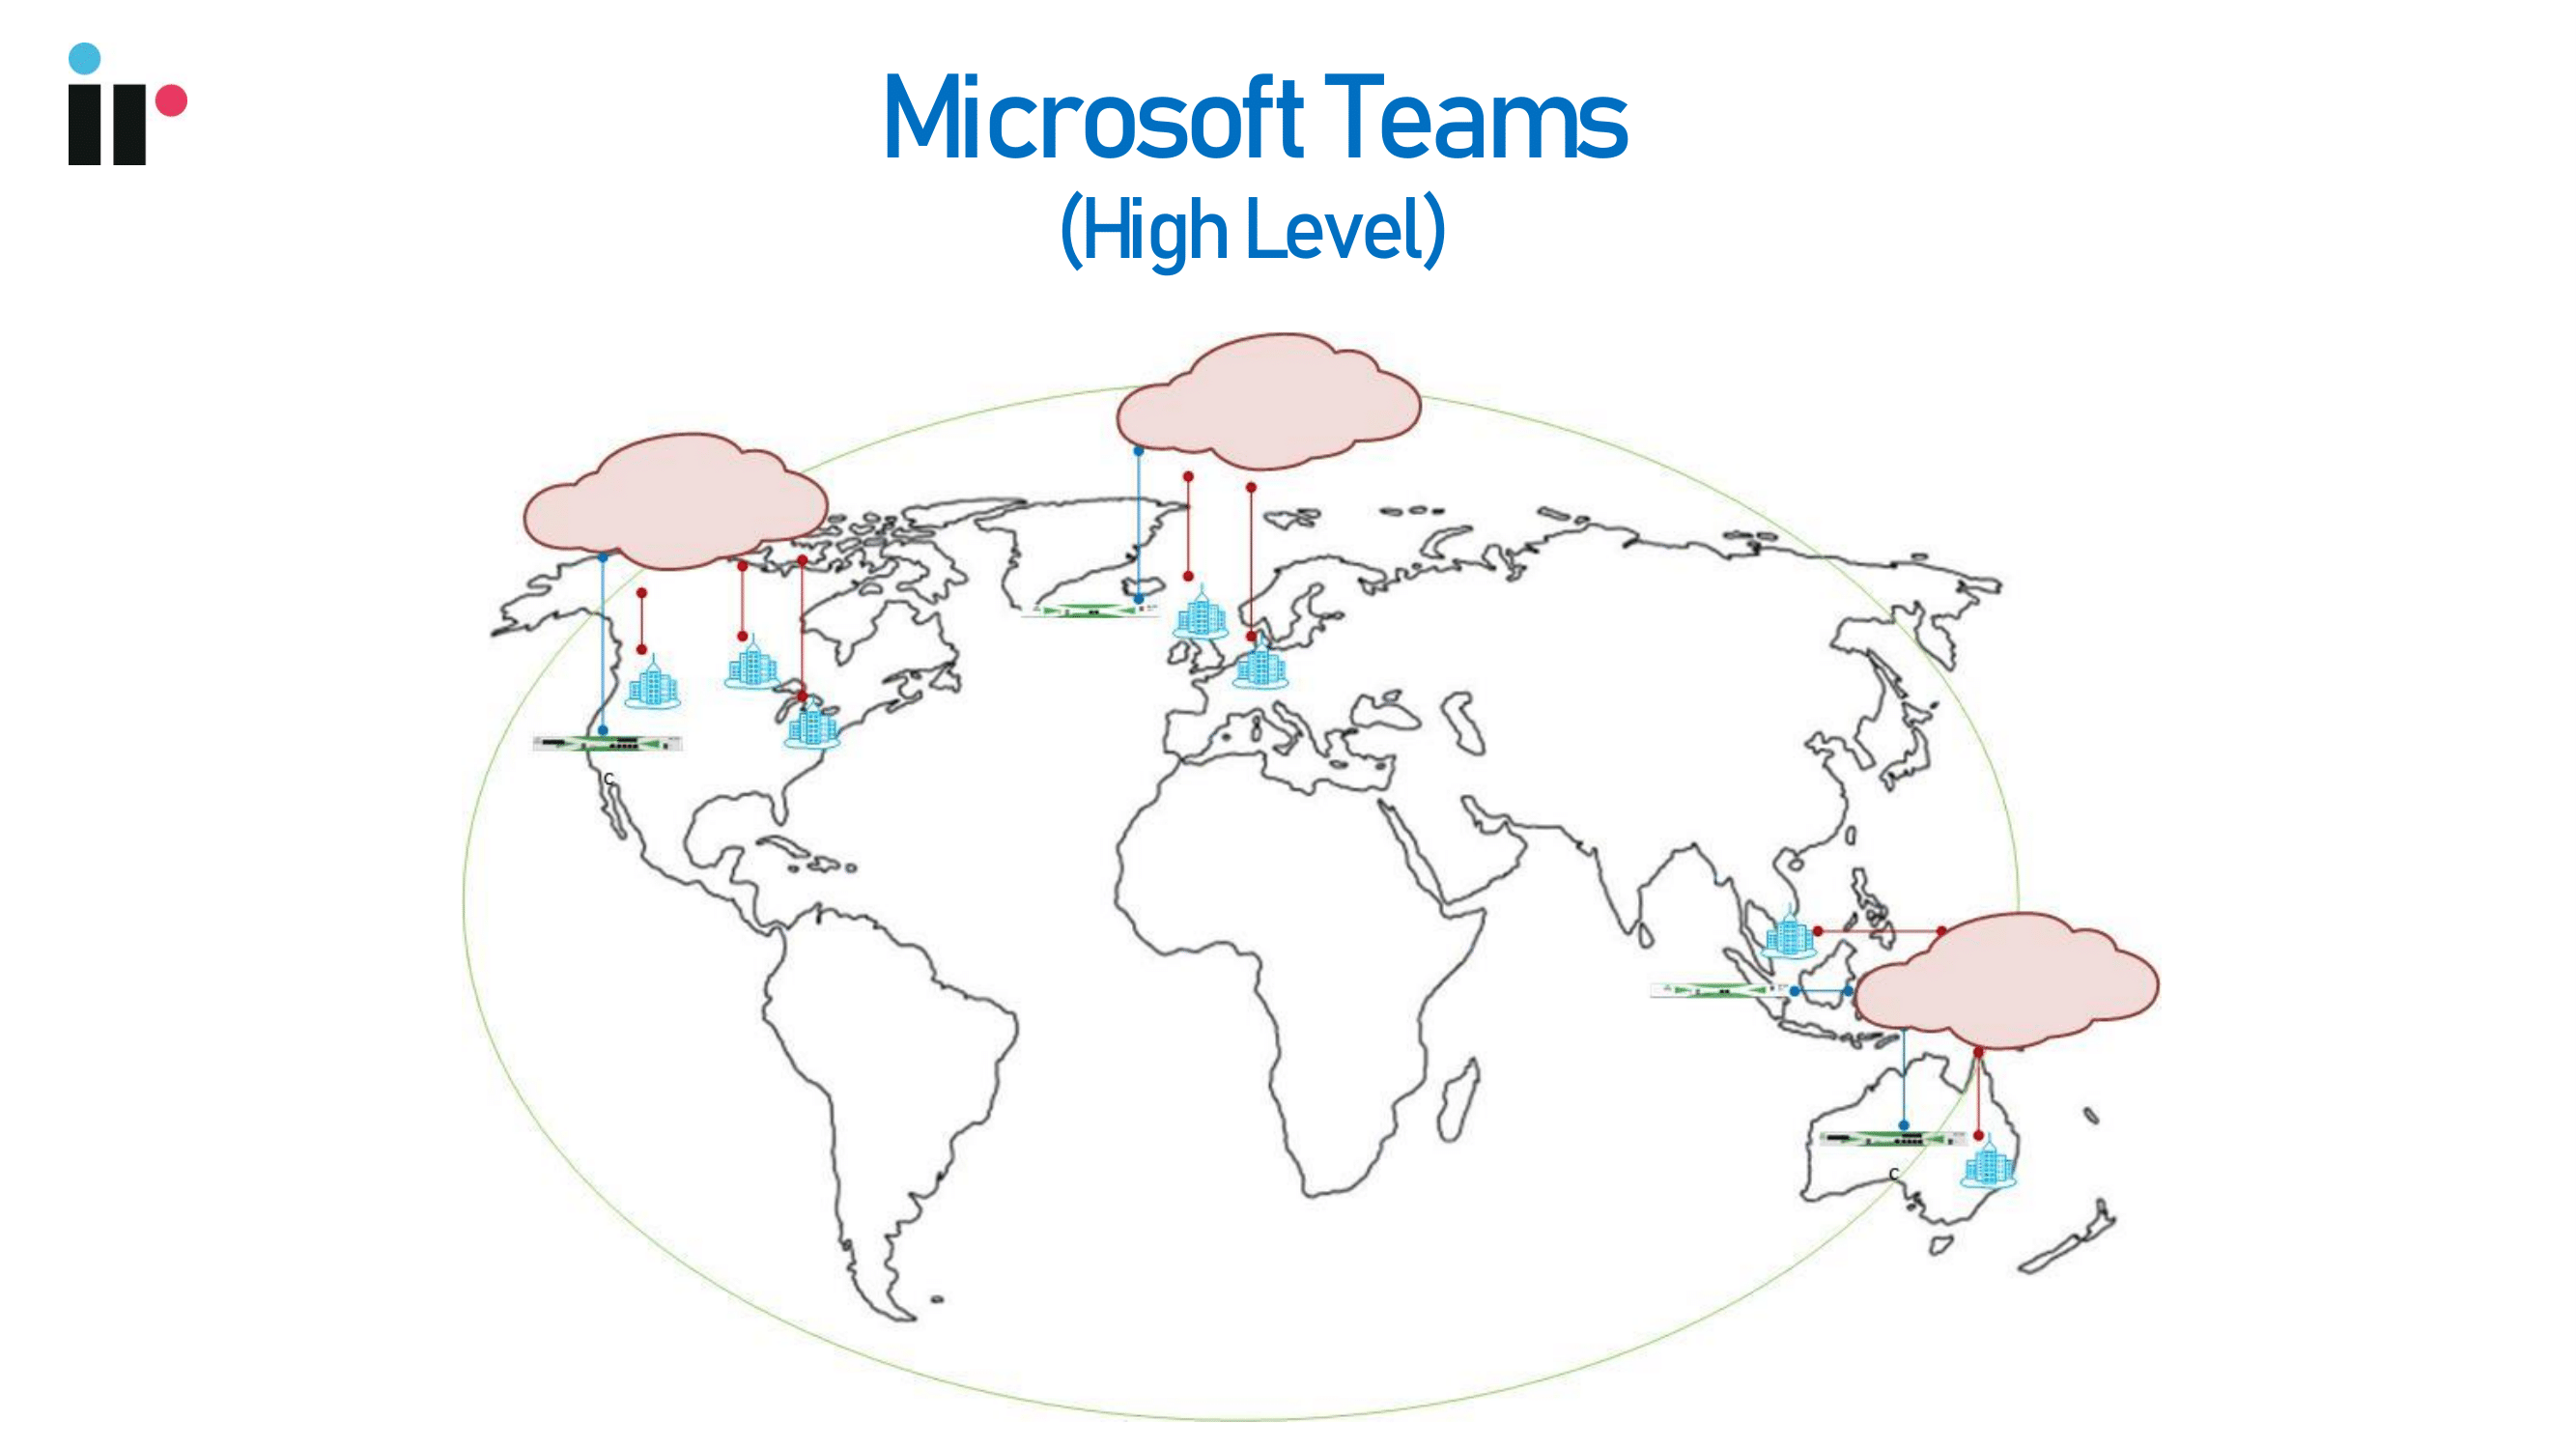 Where Microsoft Teams is headed